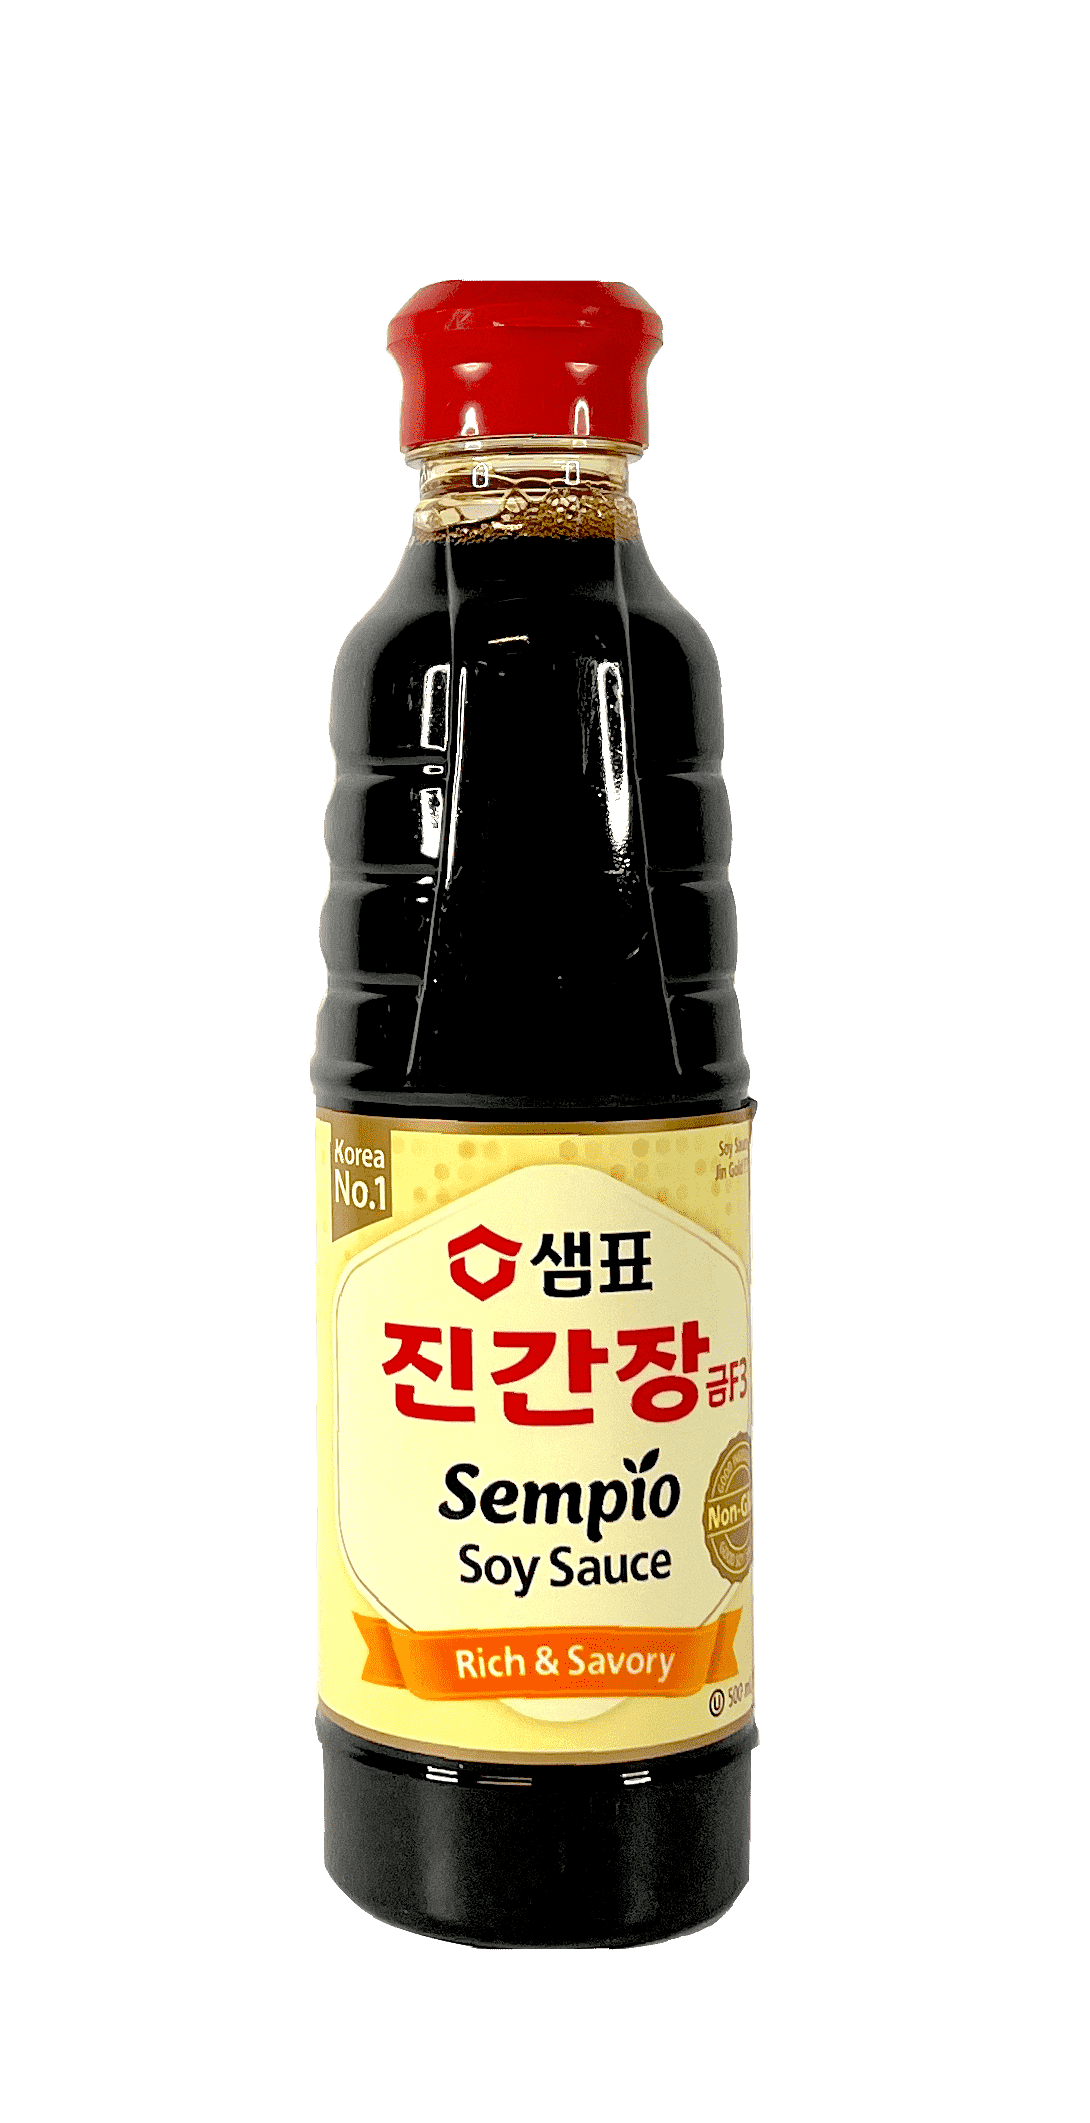 酱油 Jin Gold 500ml Sempio 韩国